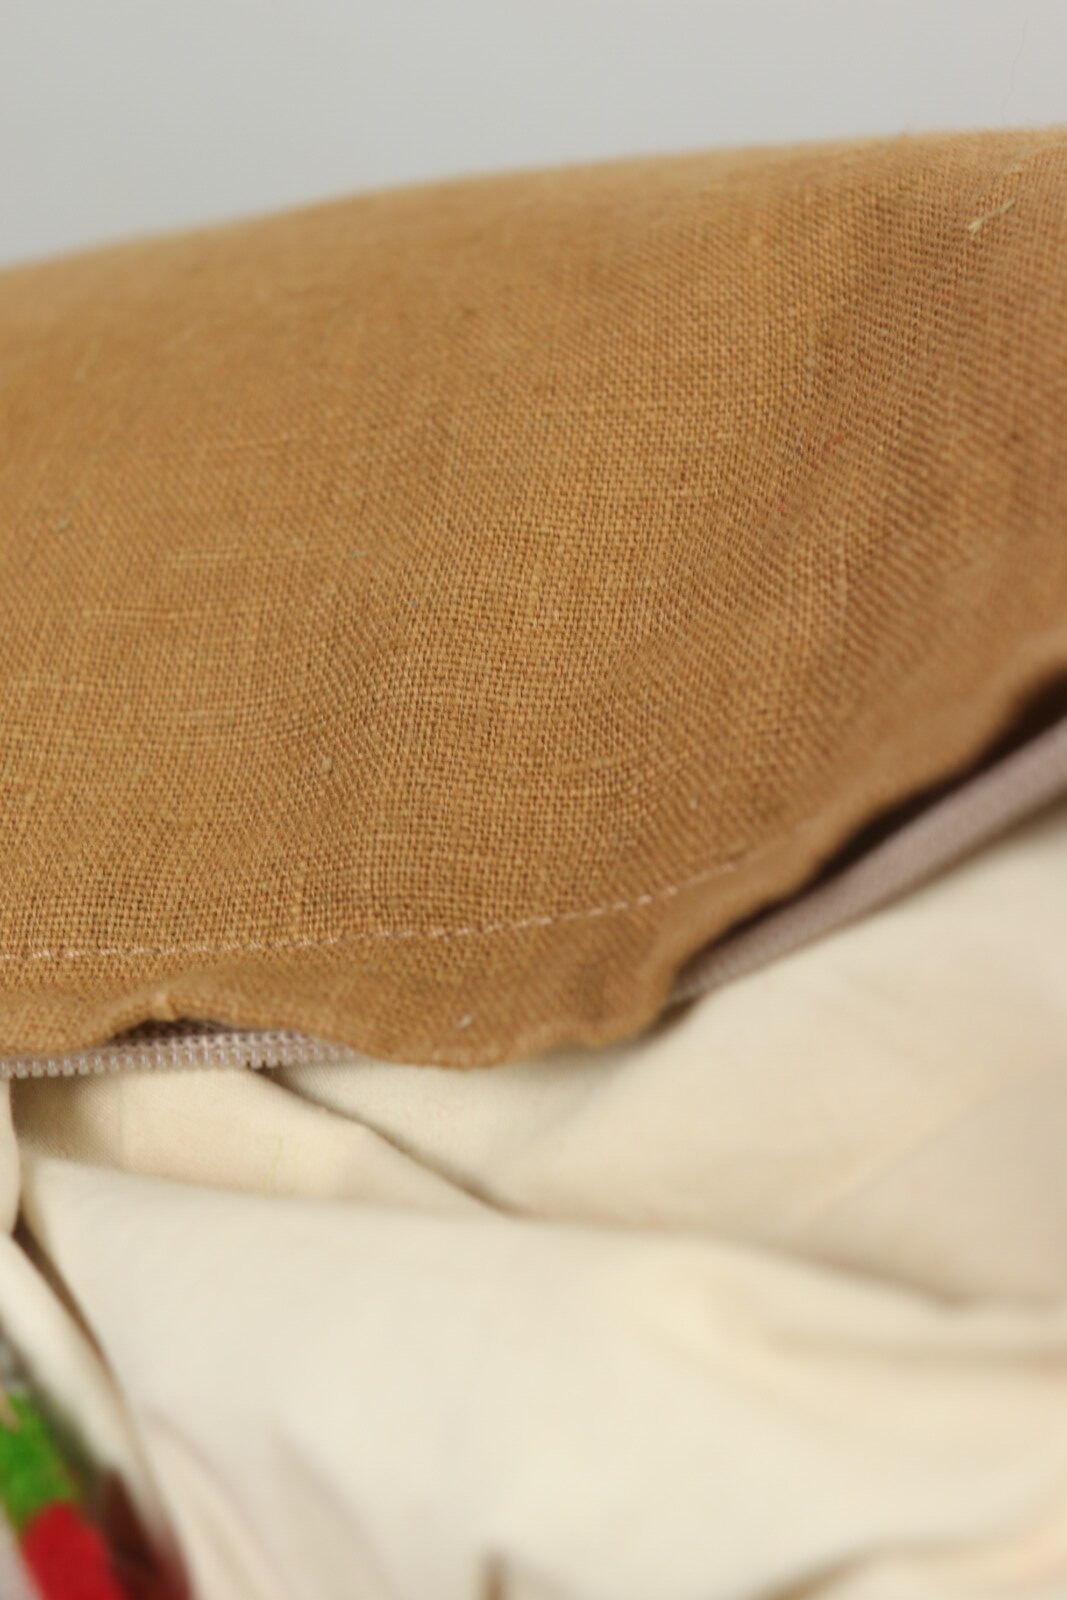 Pendleton wool fabric, vintage,USA,cushion